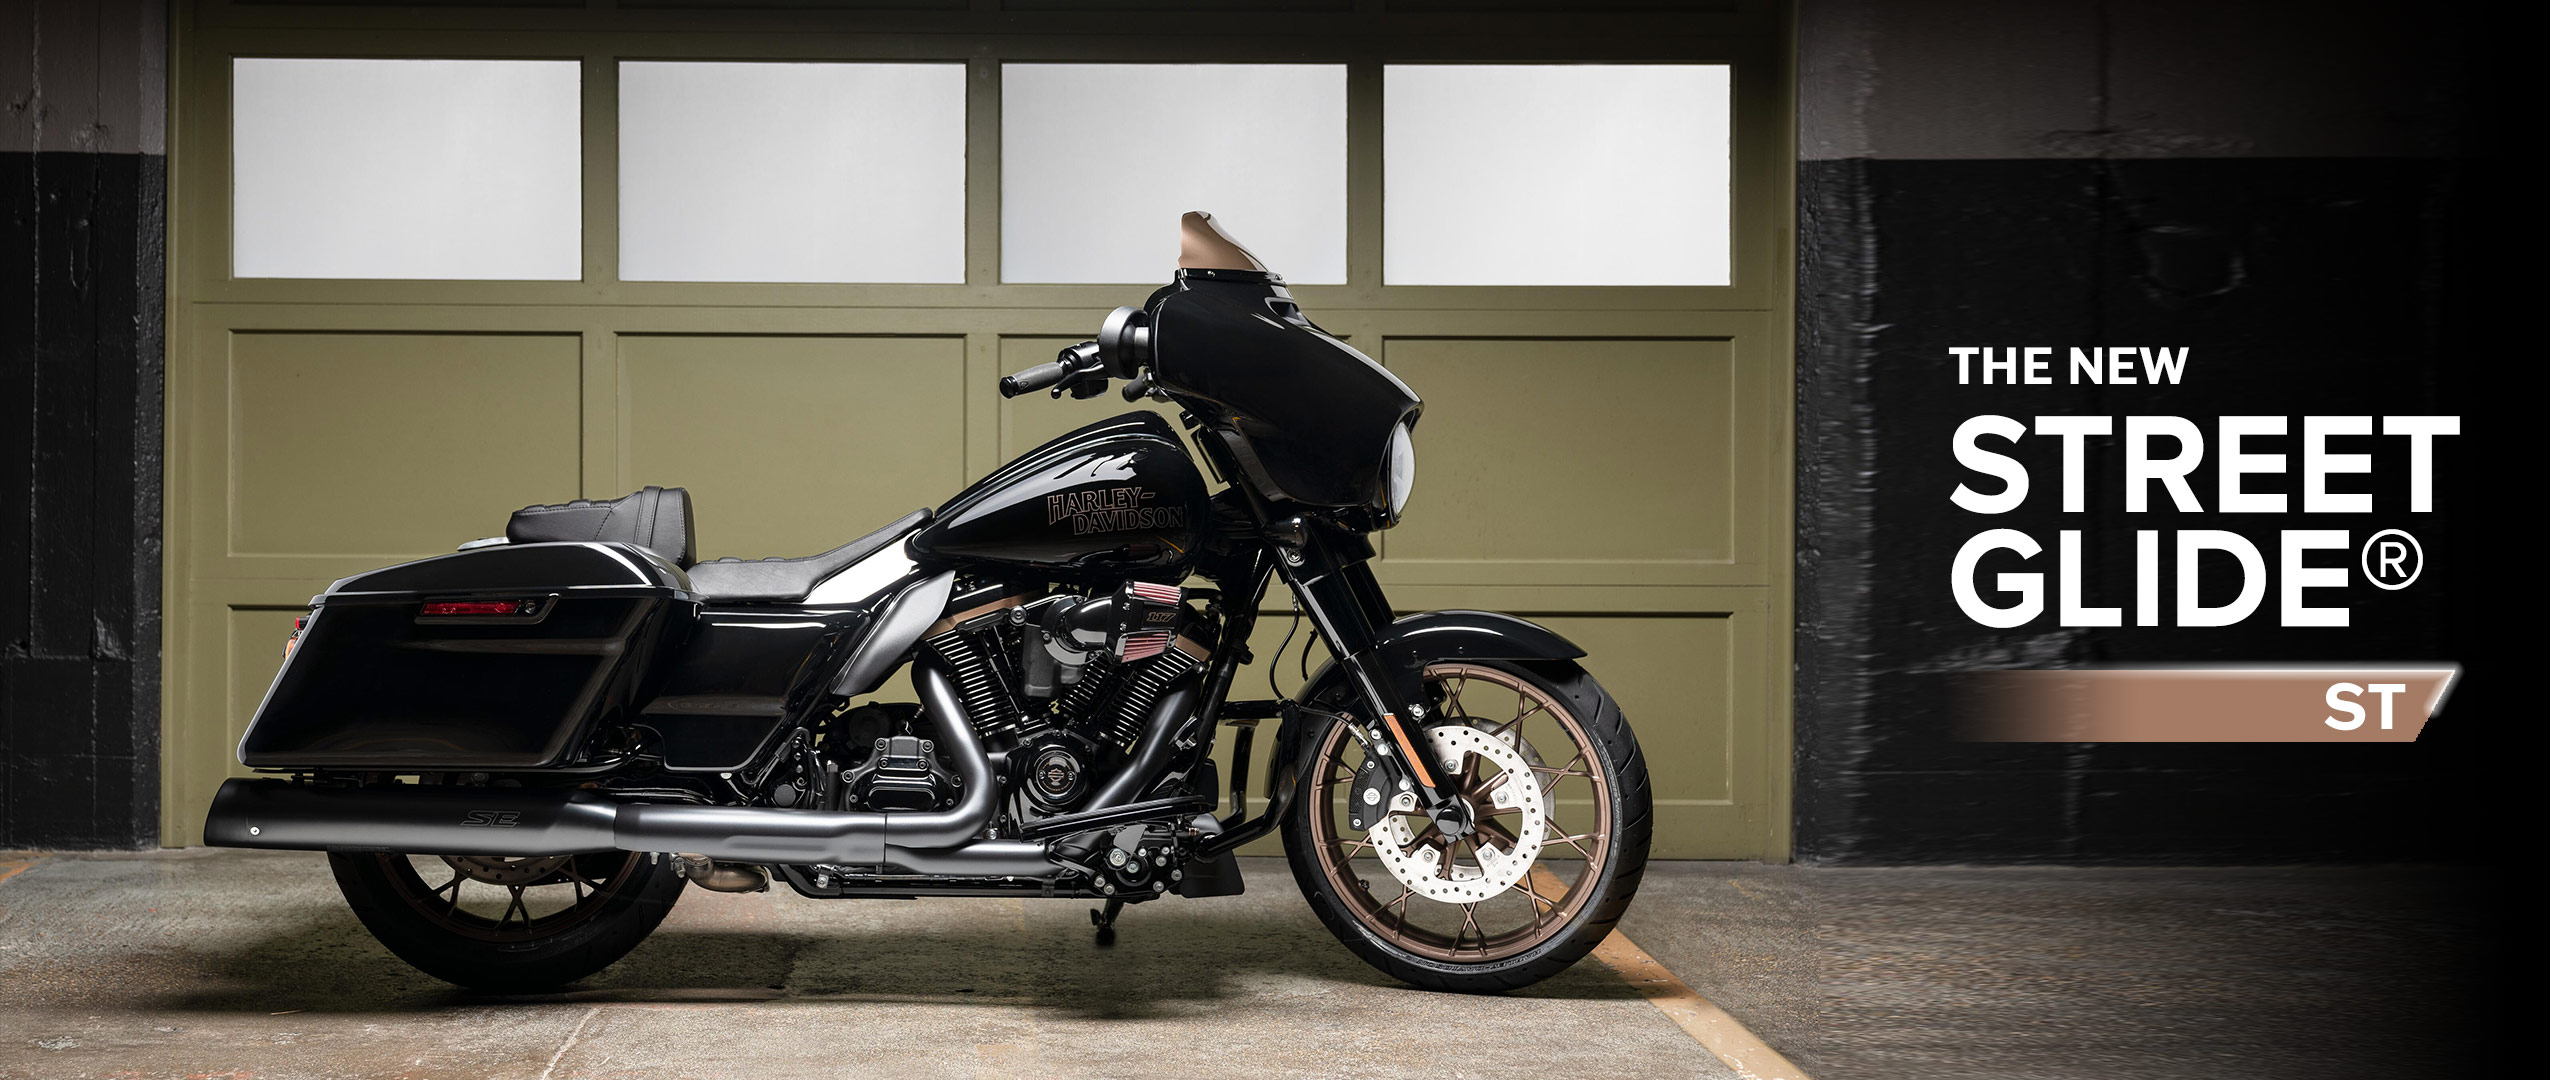 The all-new Harley-Davidson Street Glide ST Banner Image Side Profile